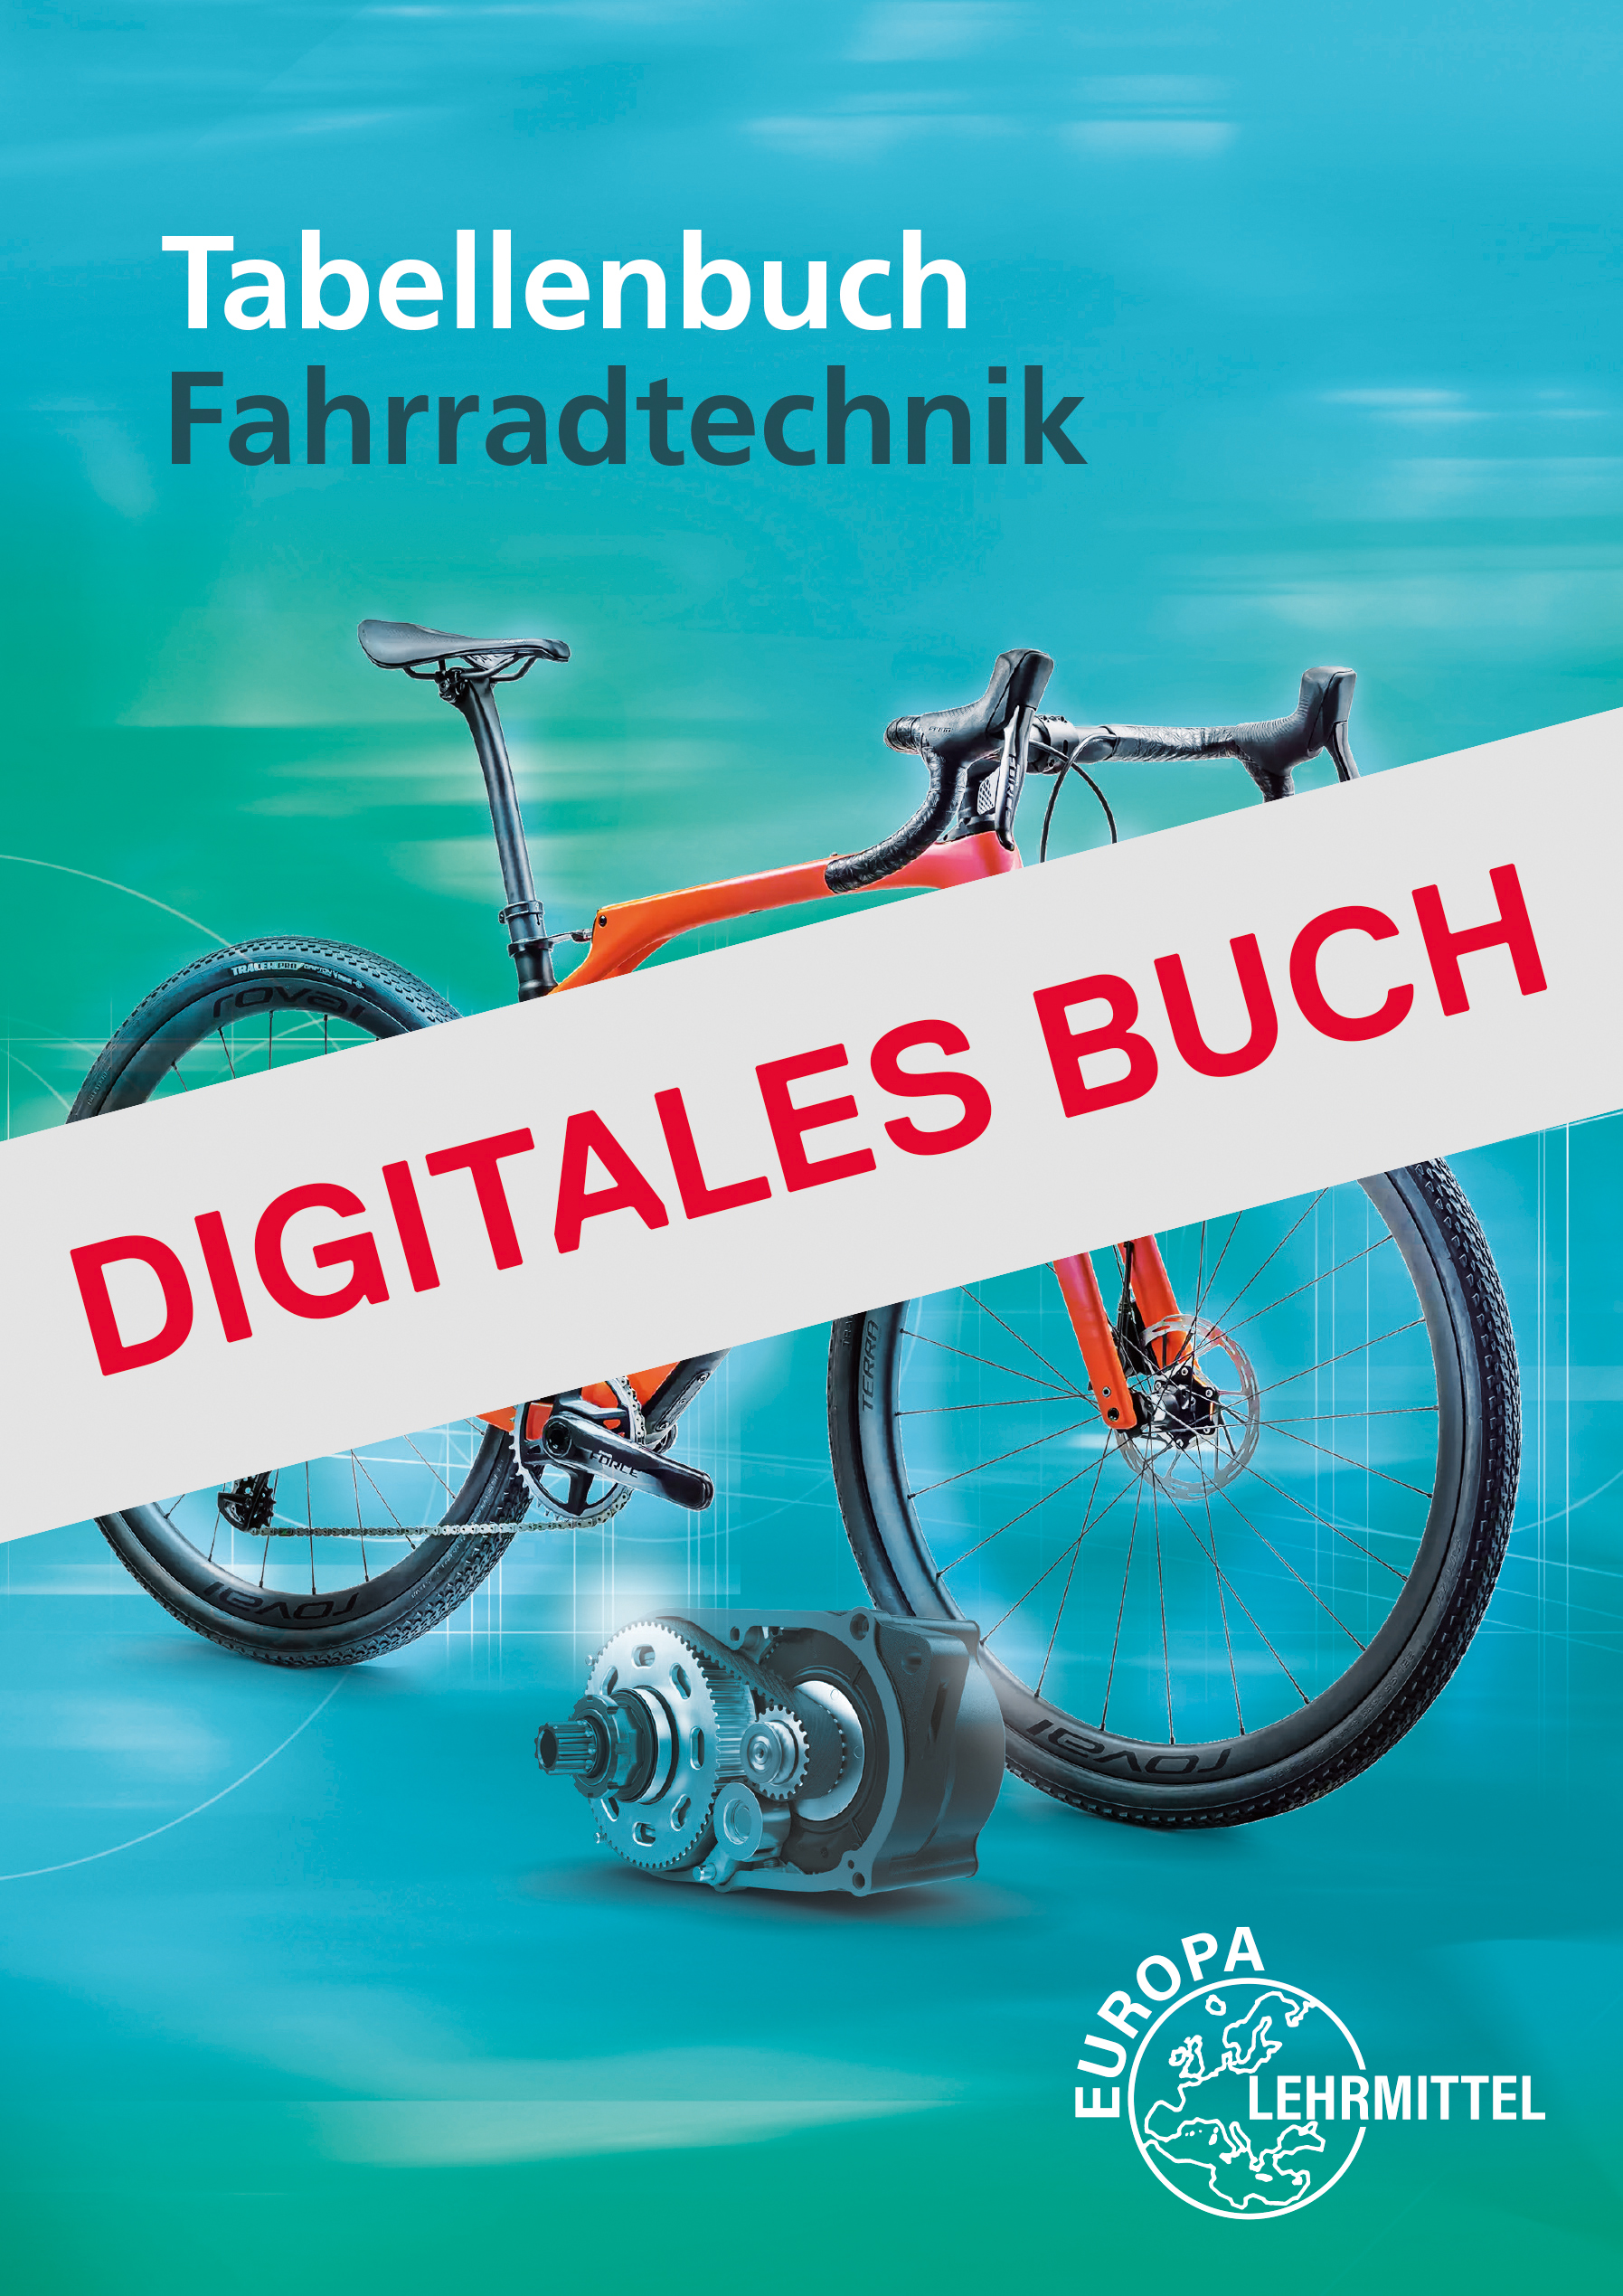 Tabellenbuch Fahrradtechnik - Digitales Buch